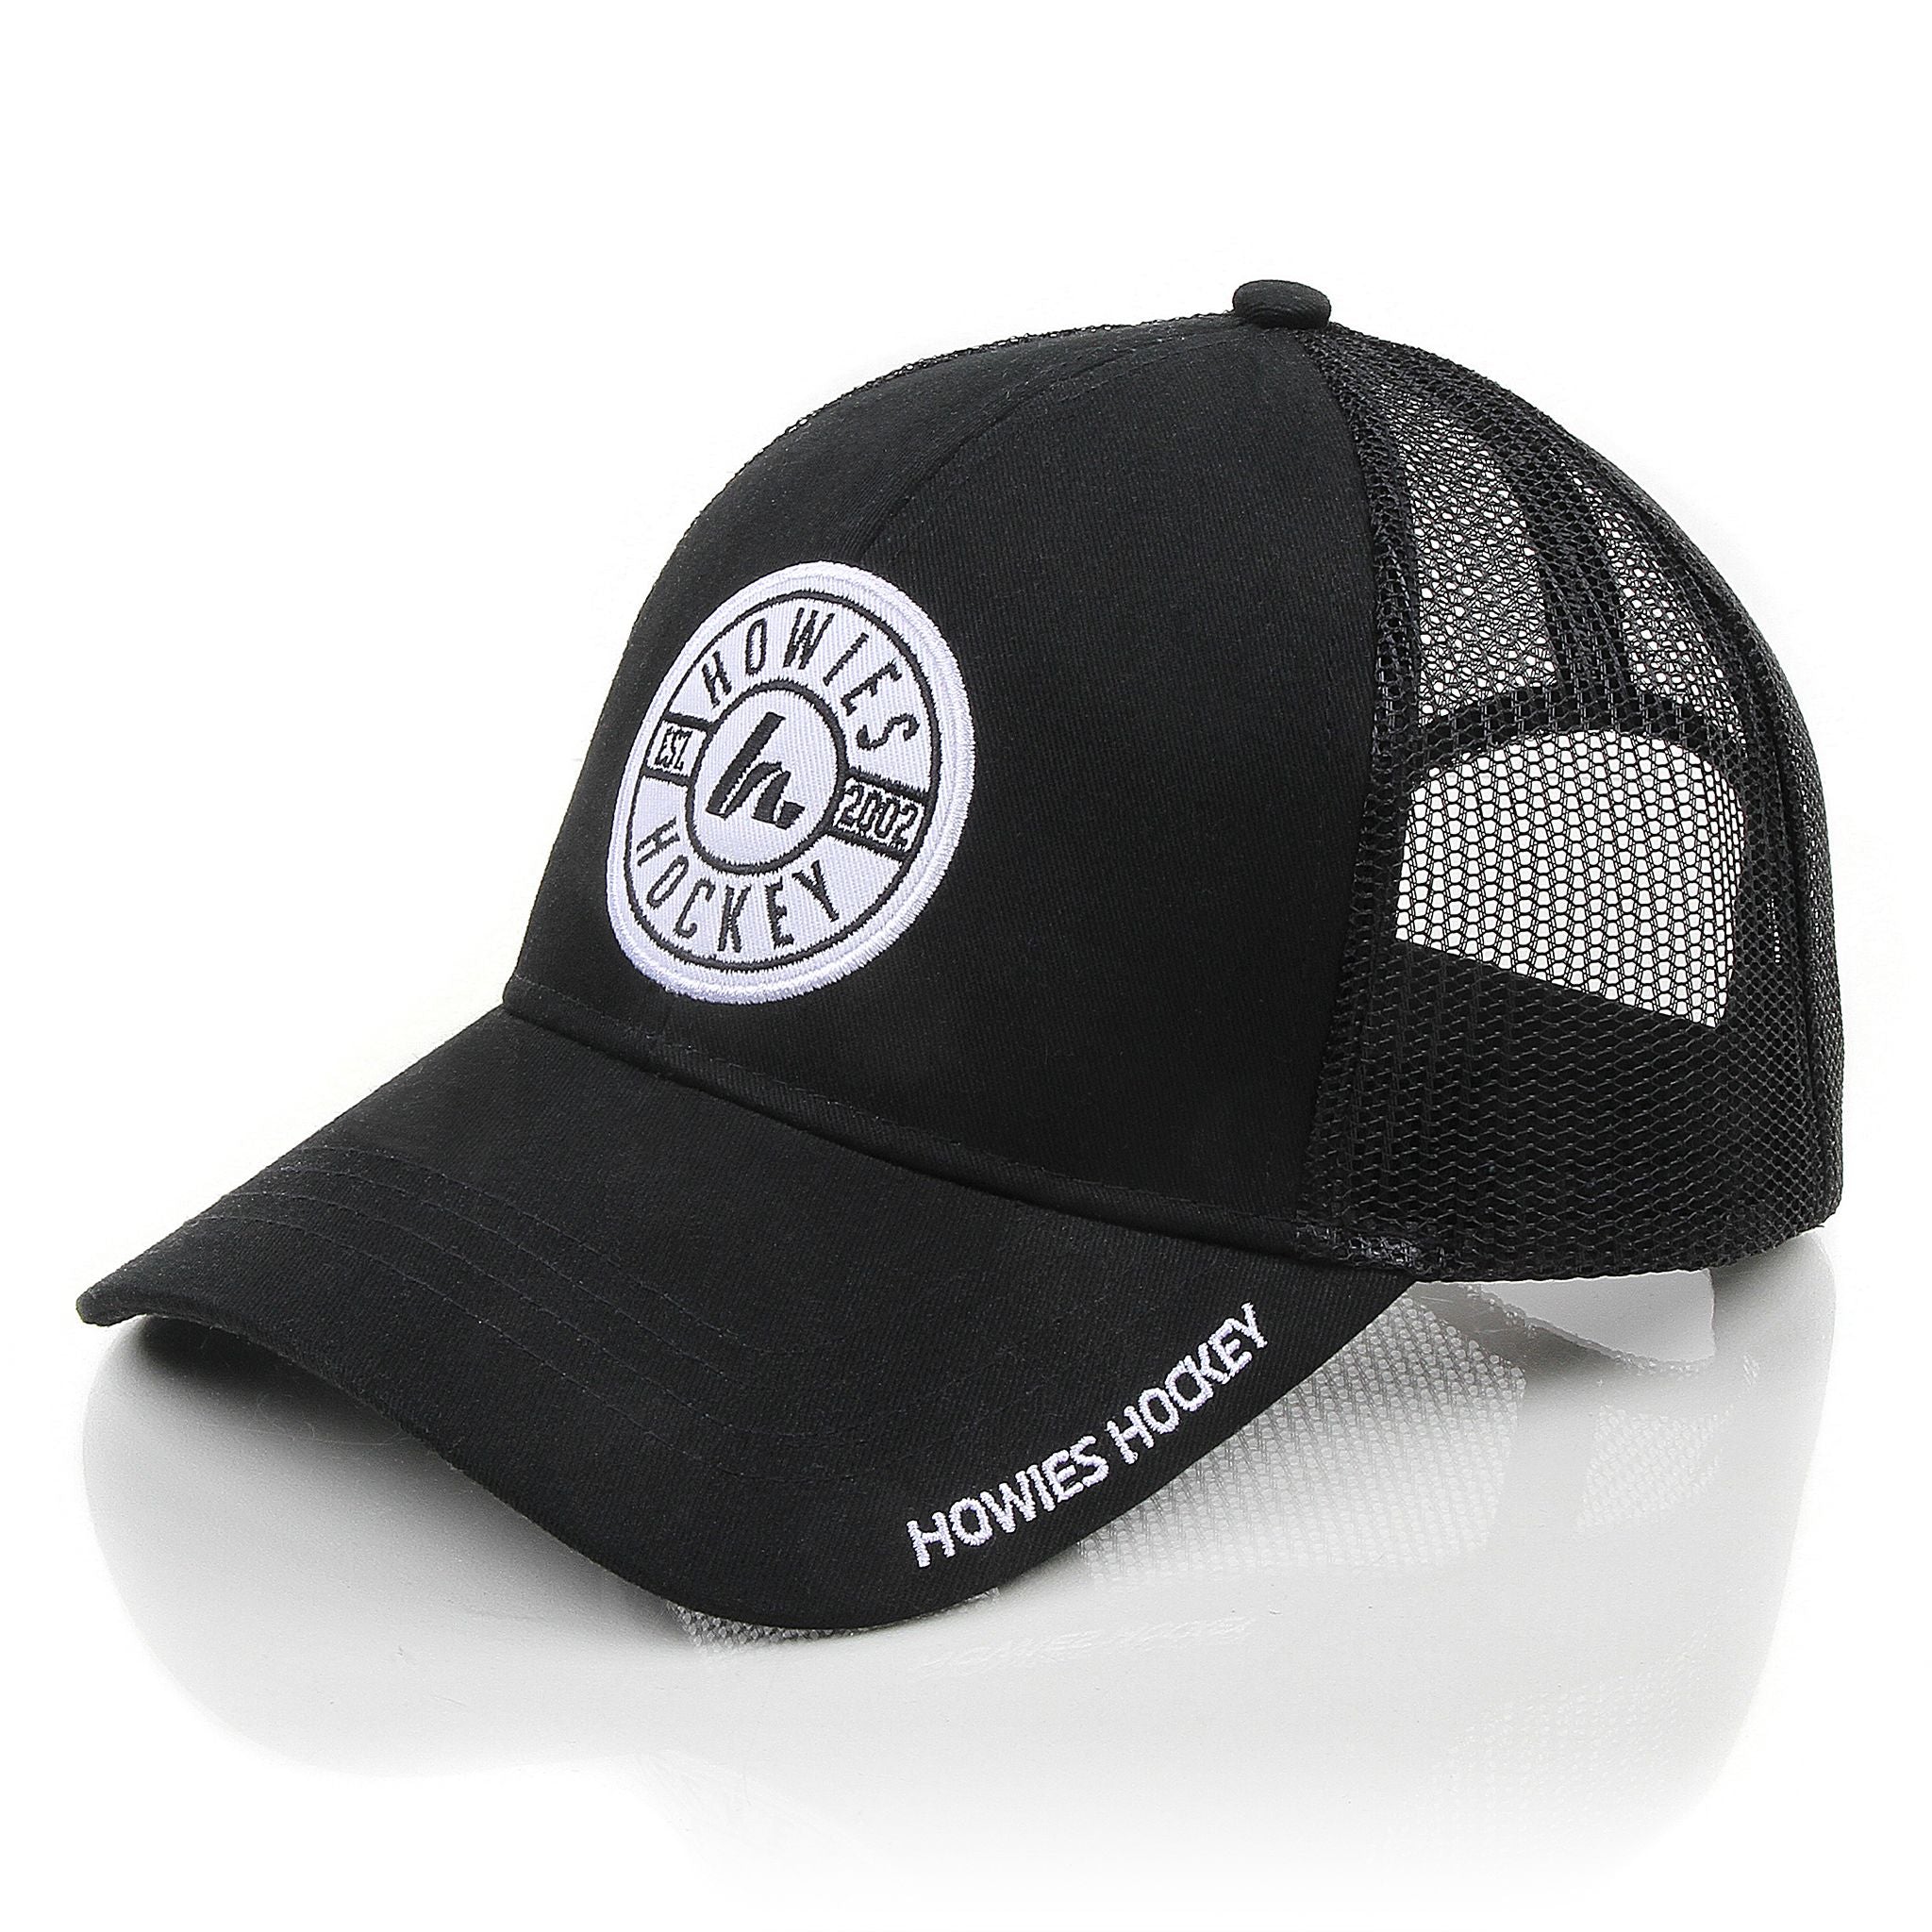 Howies hockey cap black cap THE PLAYMAKER 